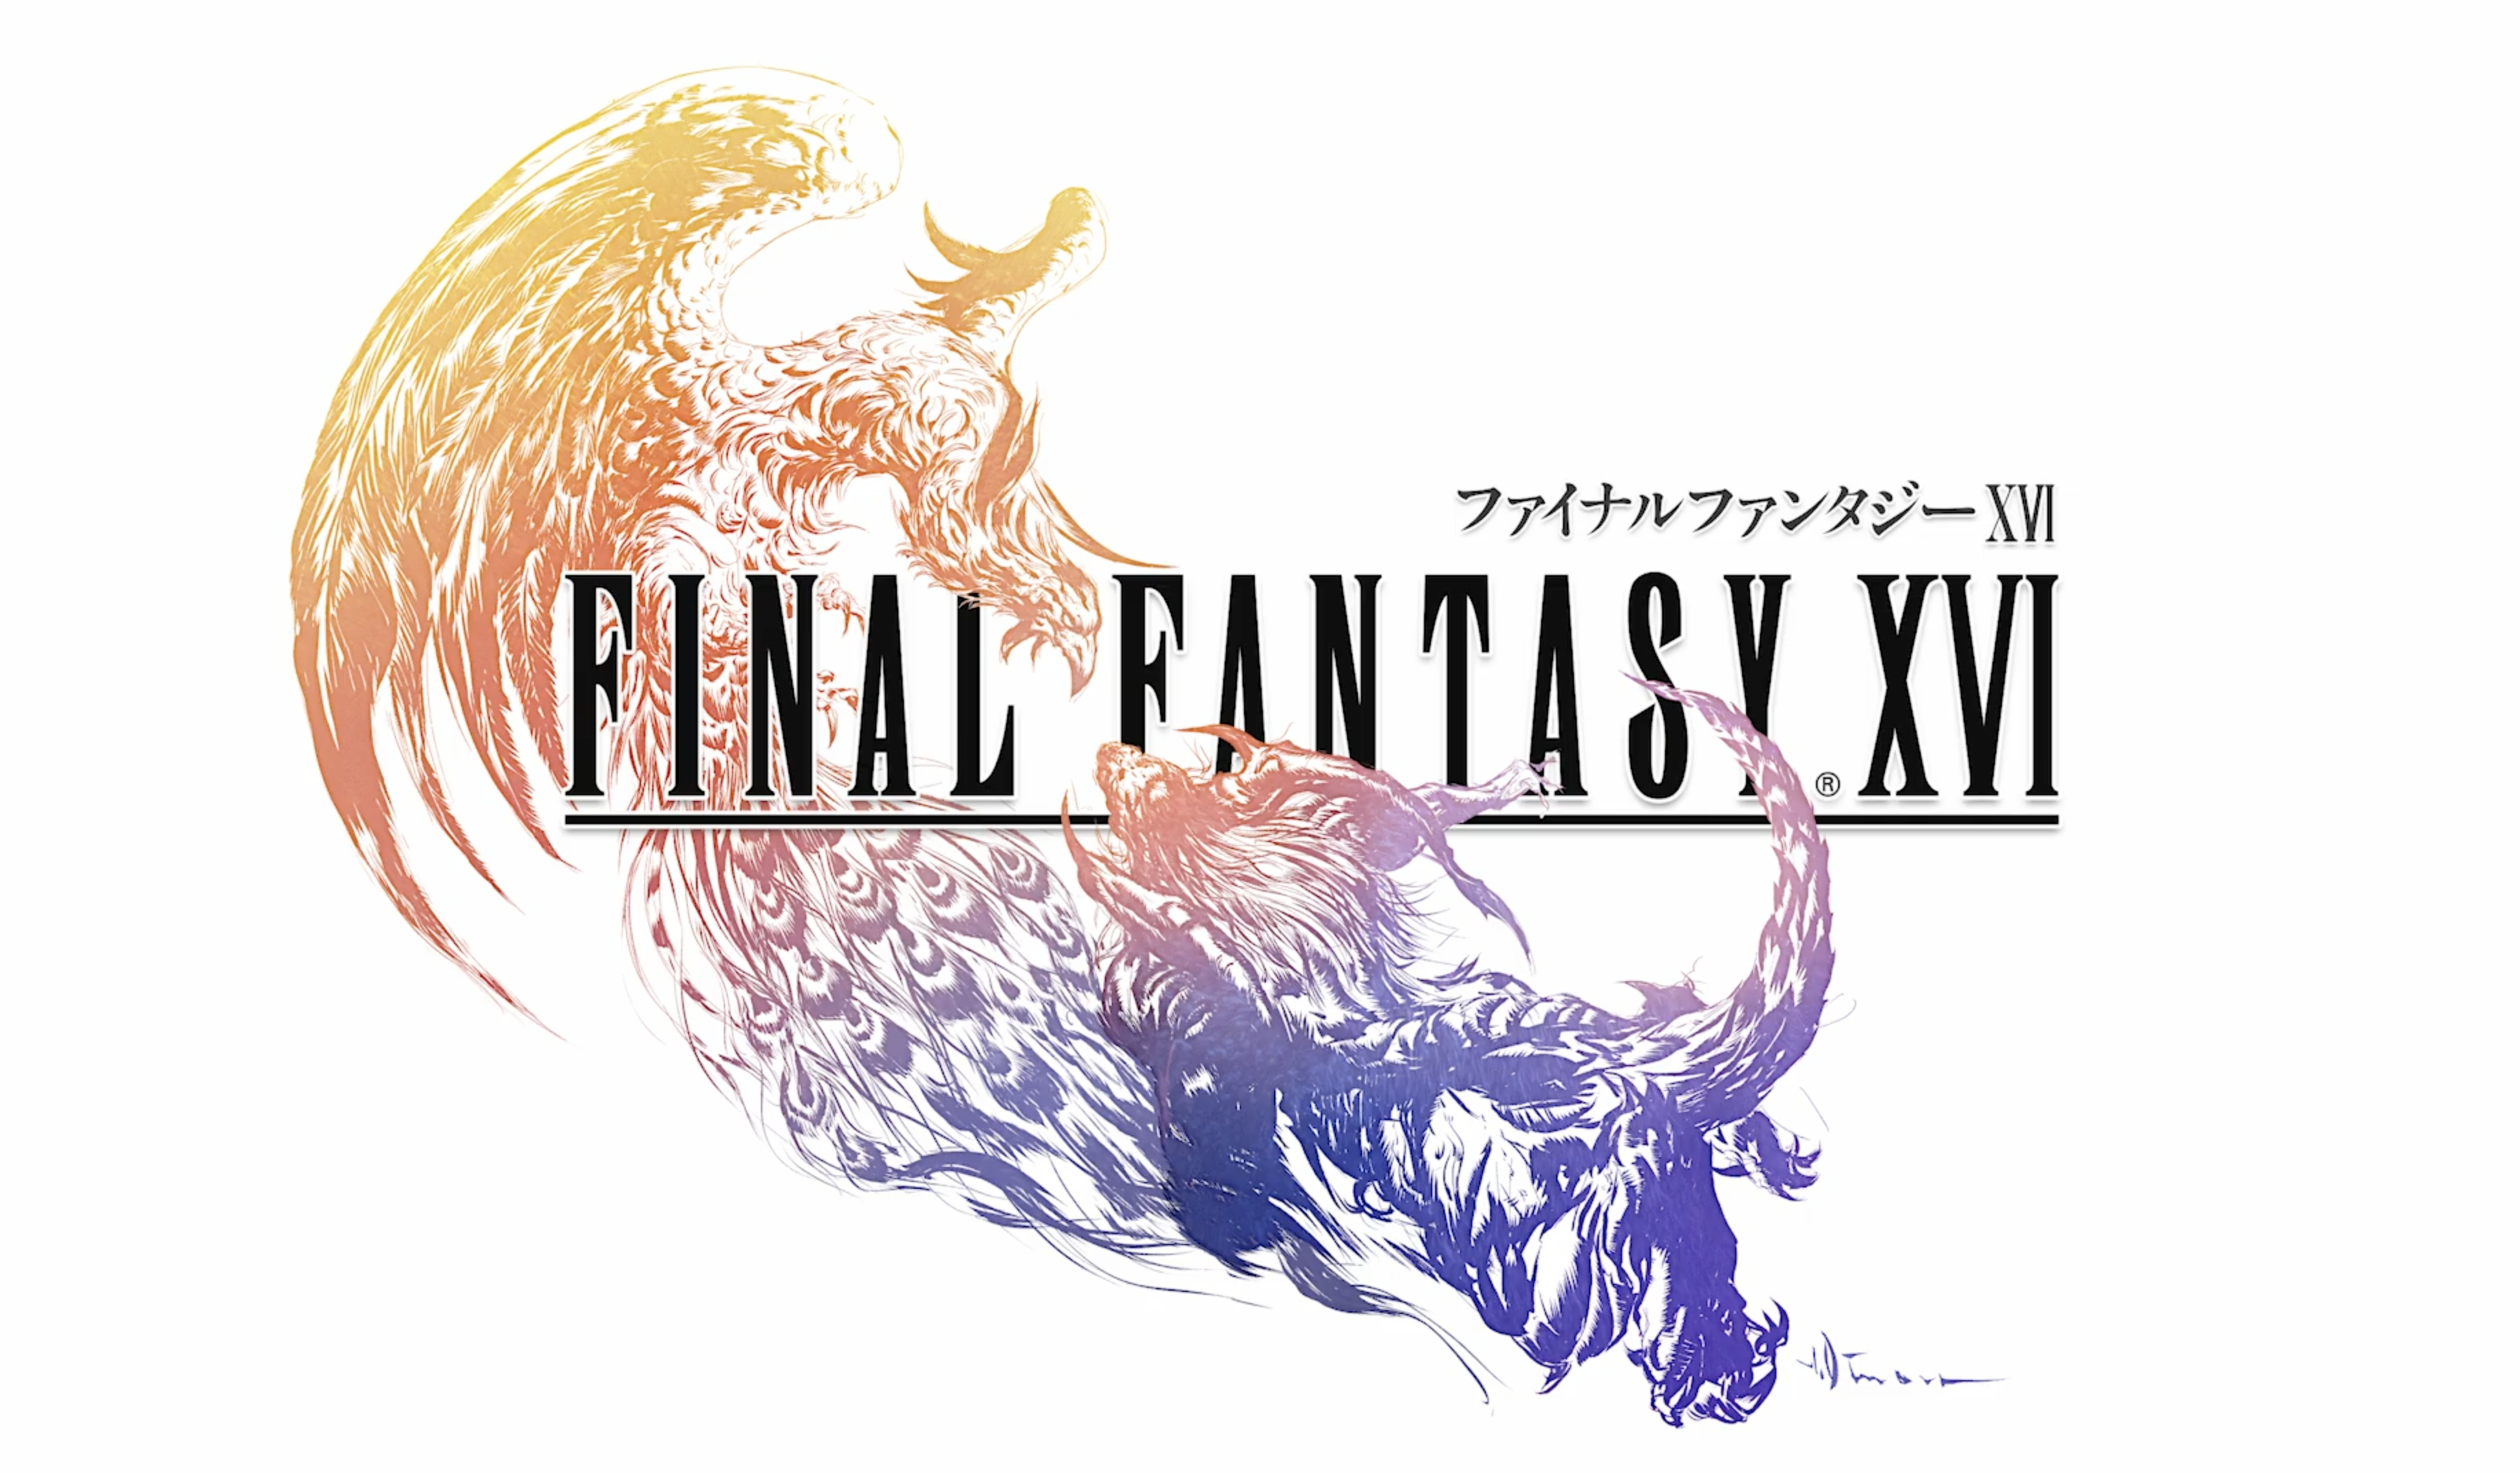 Final Fantasy XVI発表。 プレイステーションとPC独占